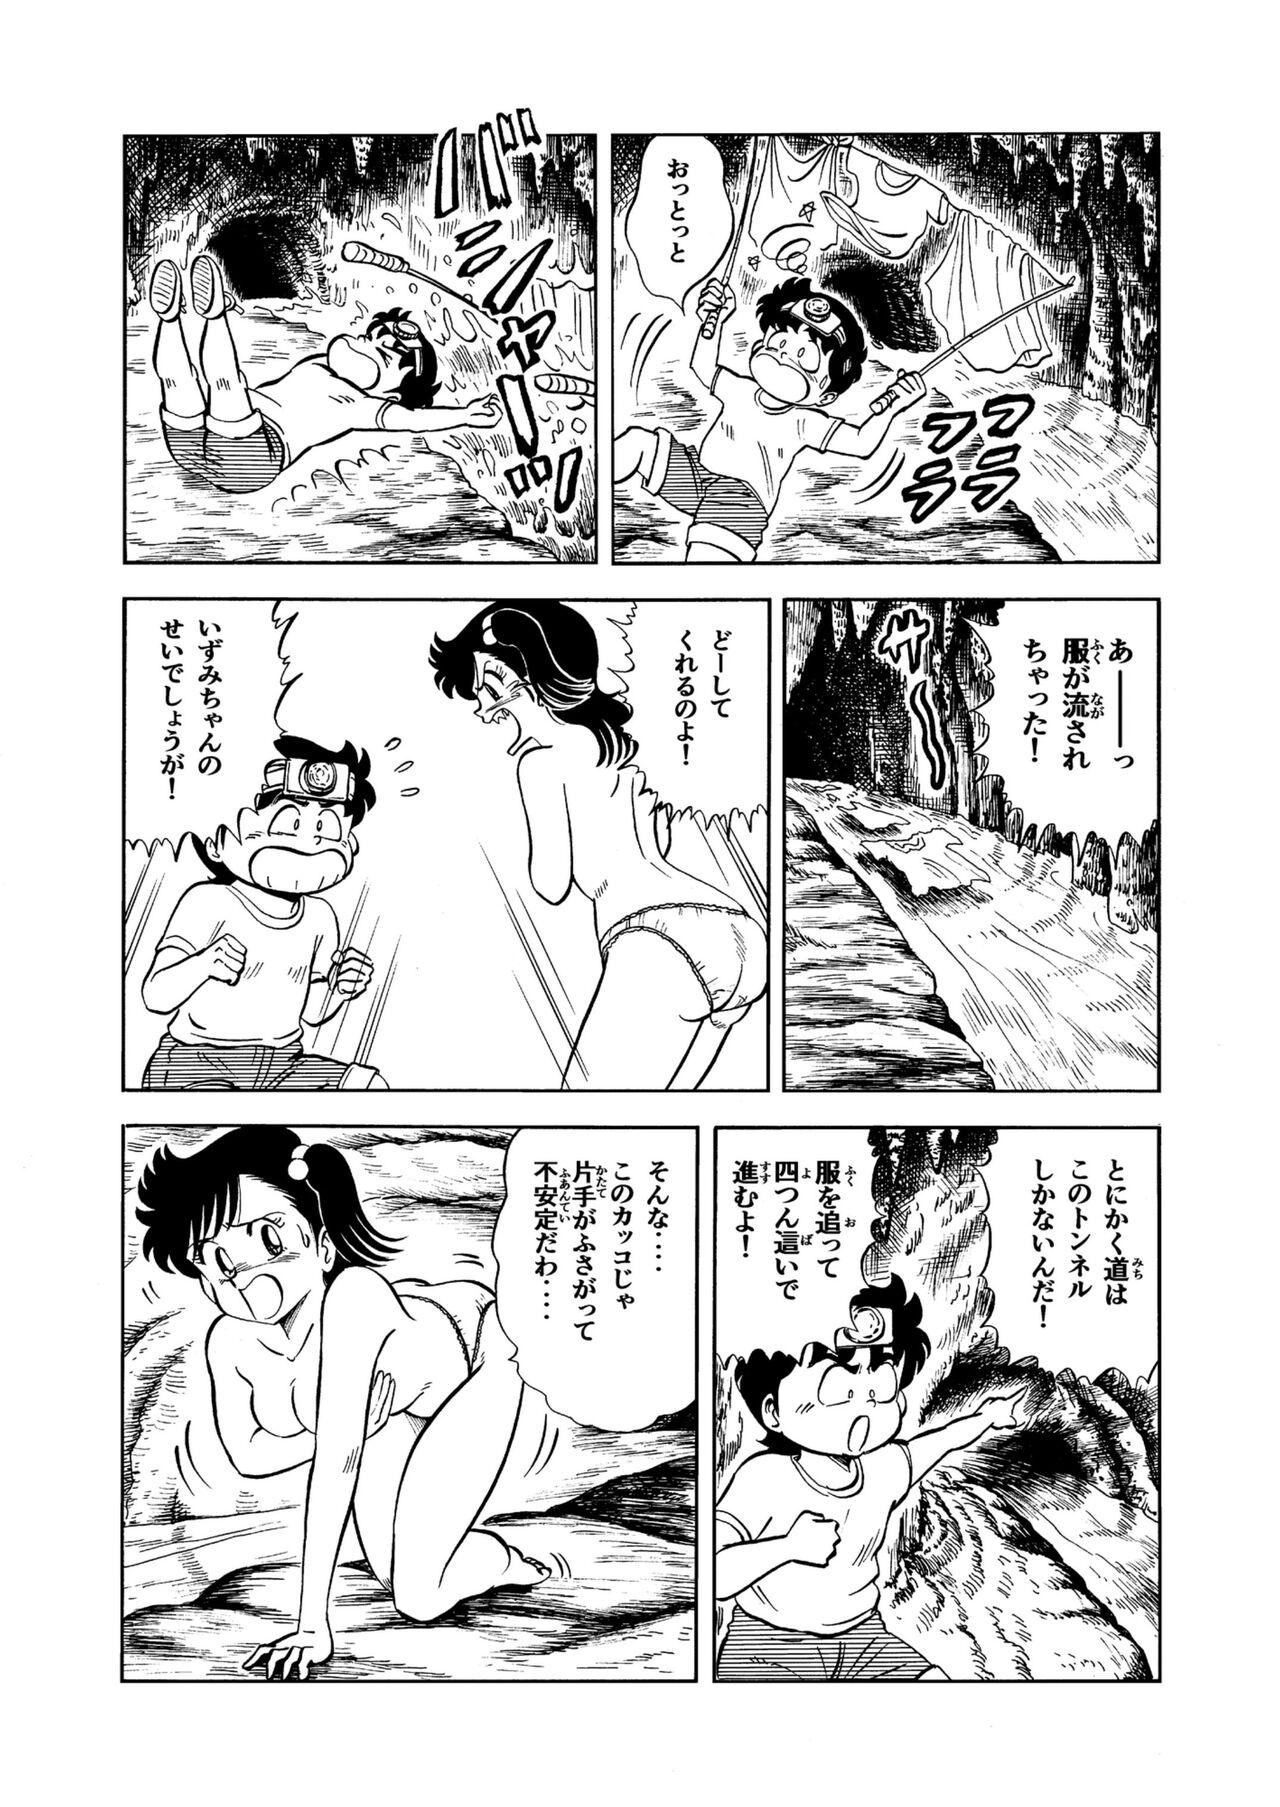 Leche Hard Sex Izumi-chan 2 - Heart catch izumi-chan Bang Bros - Page 5